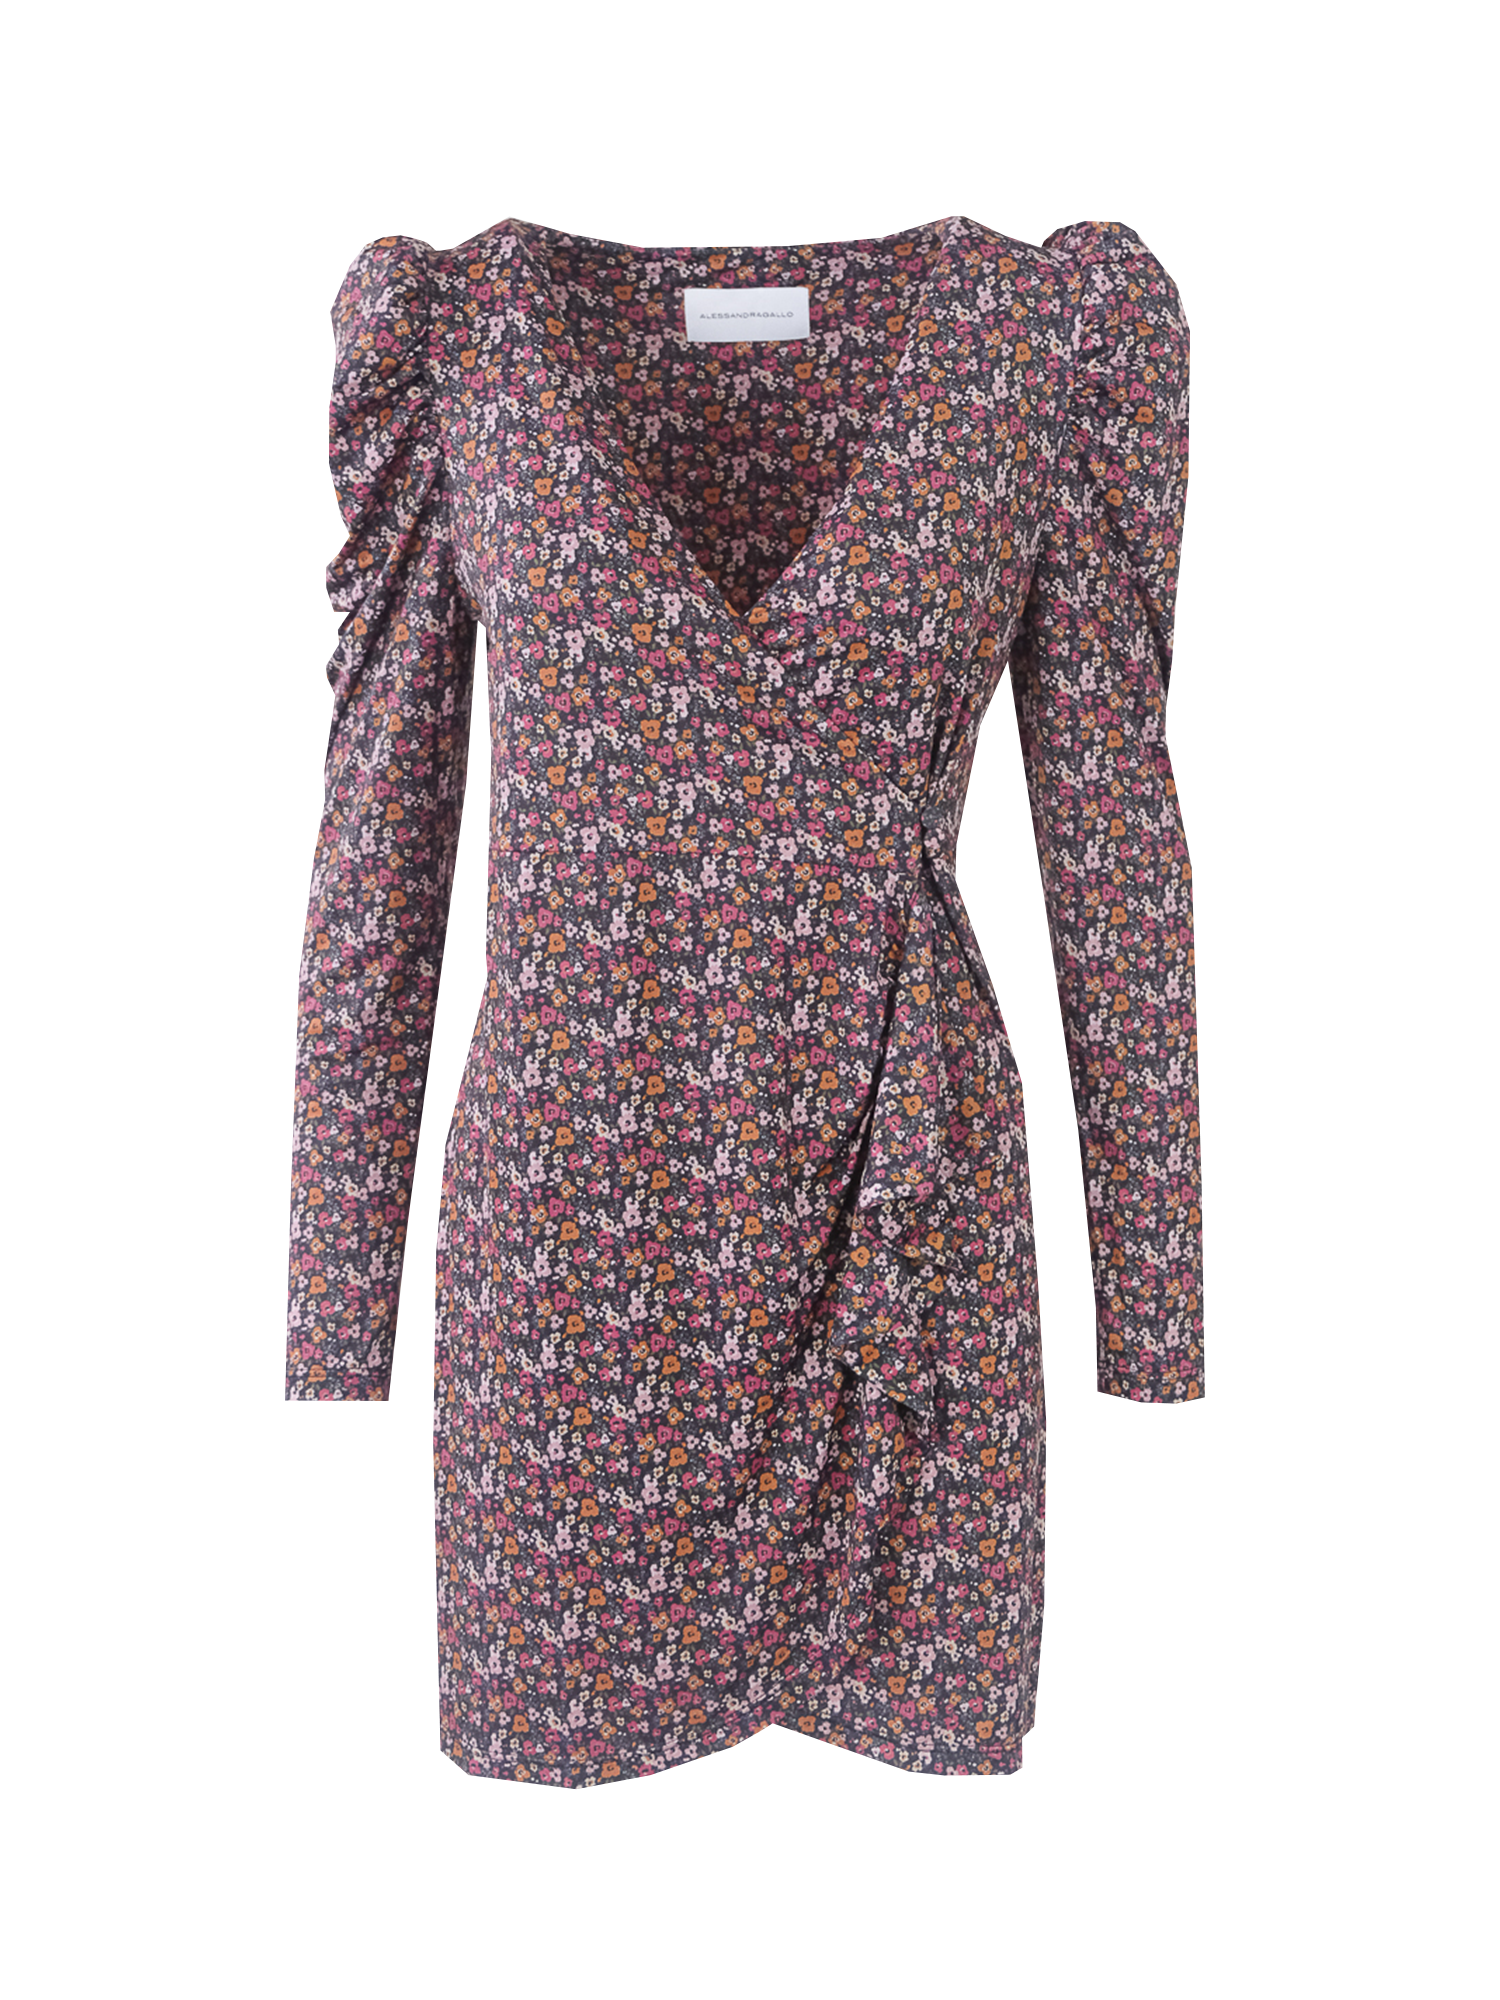 EMMA - short lycra dress with Wild Flowers pattern